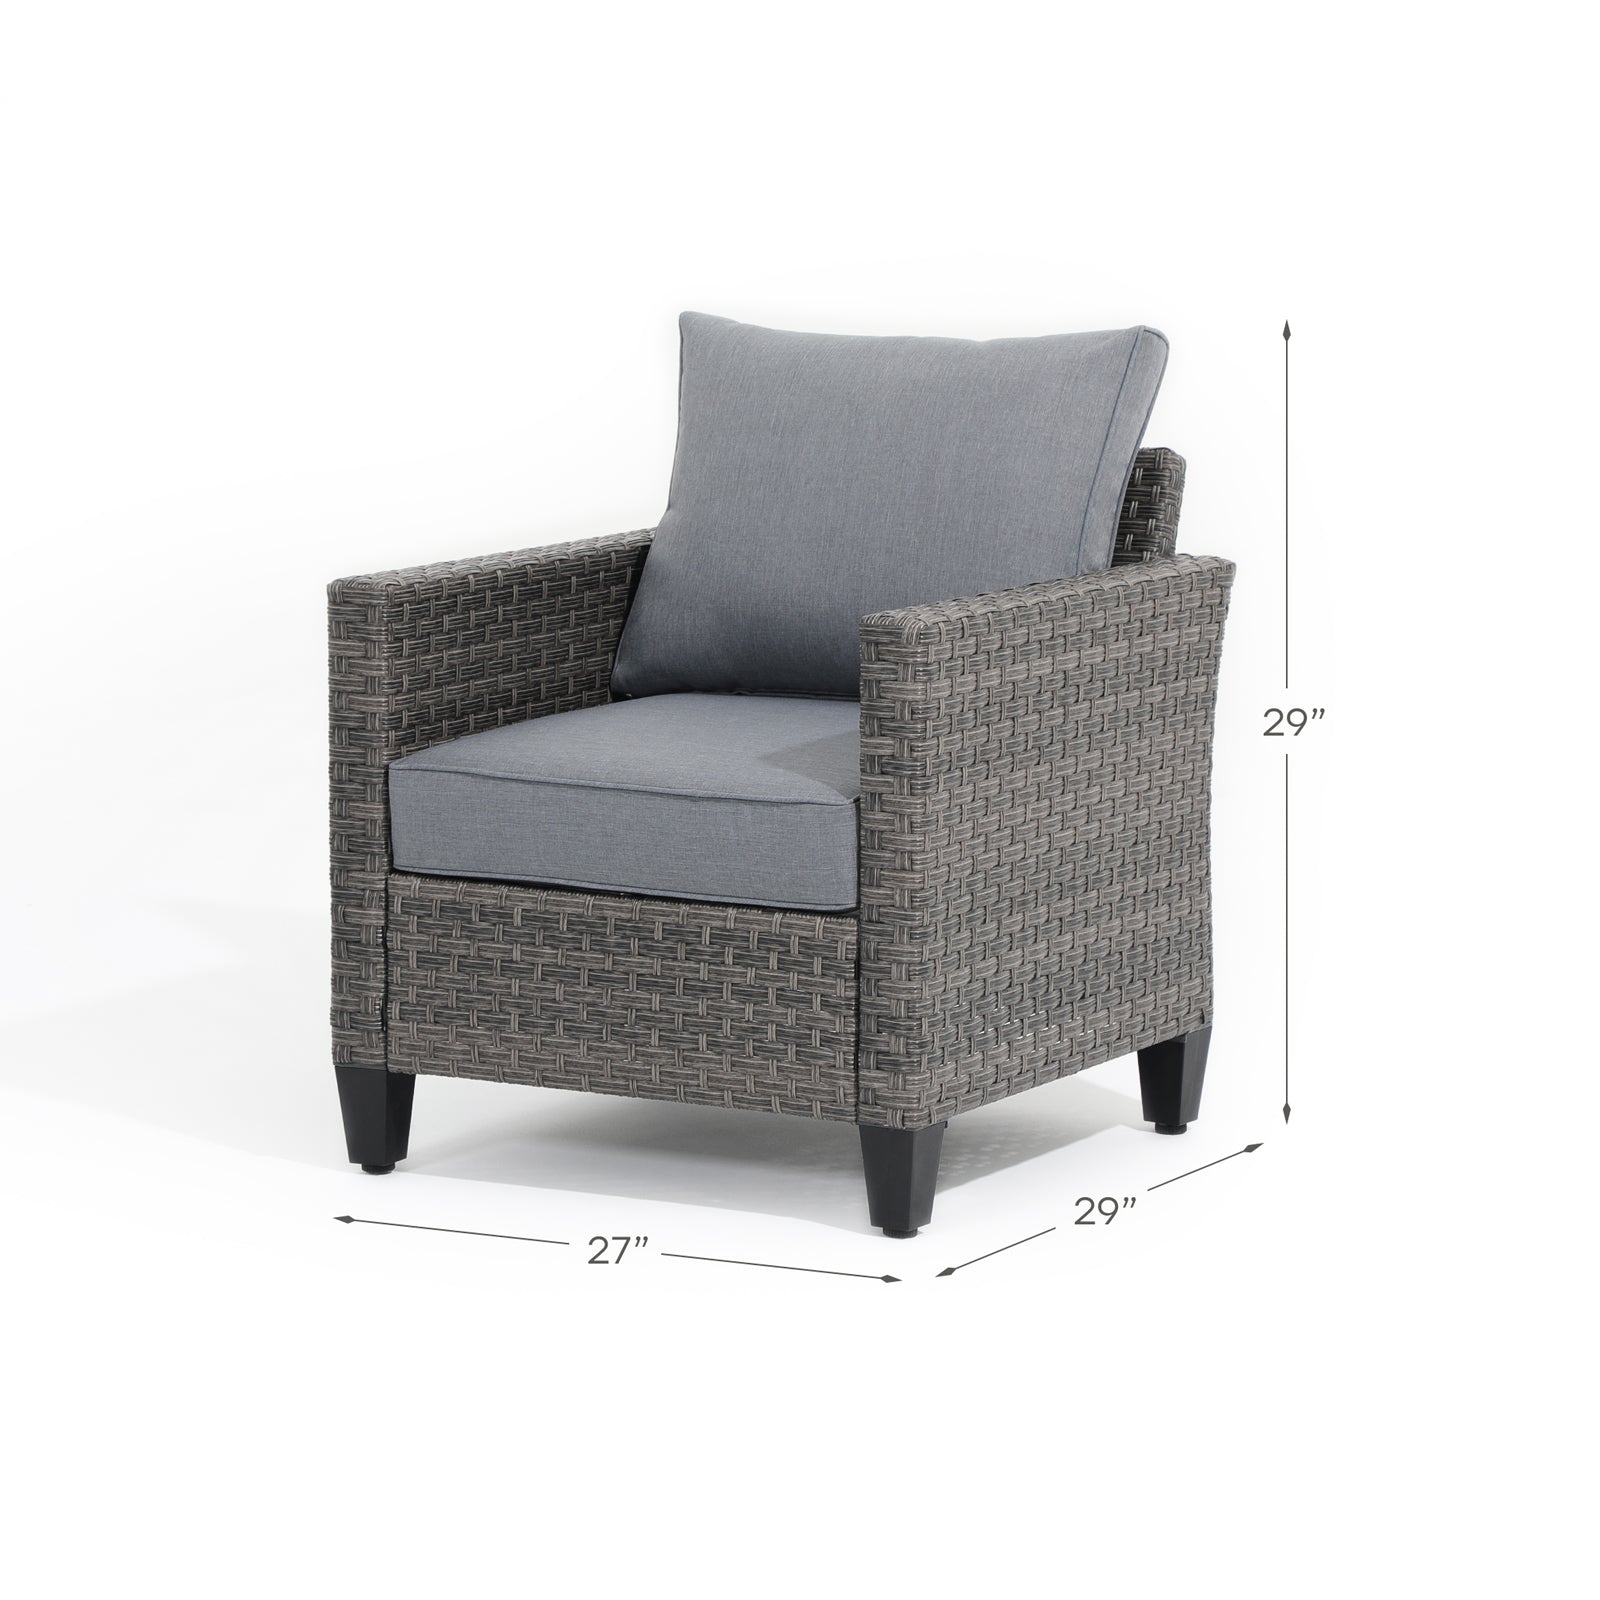 Ayia lounge chair with rattan design, grey cushions, dimension information - Jardina Furniture#color_Grey